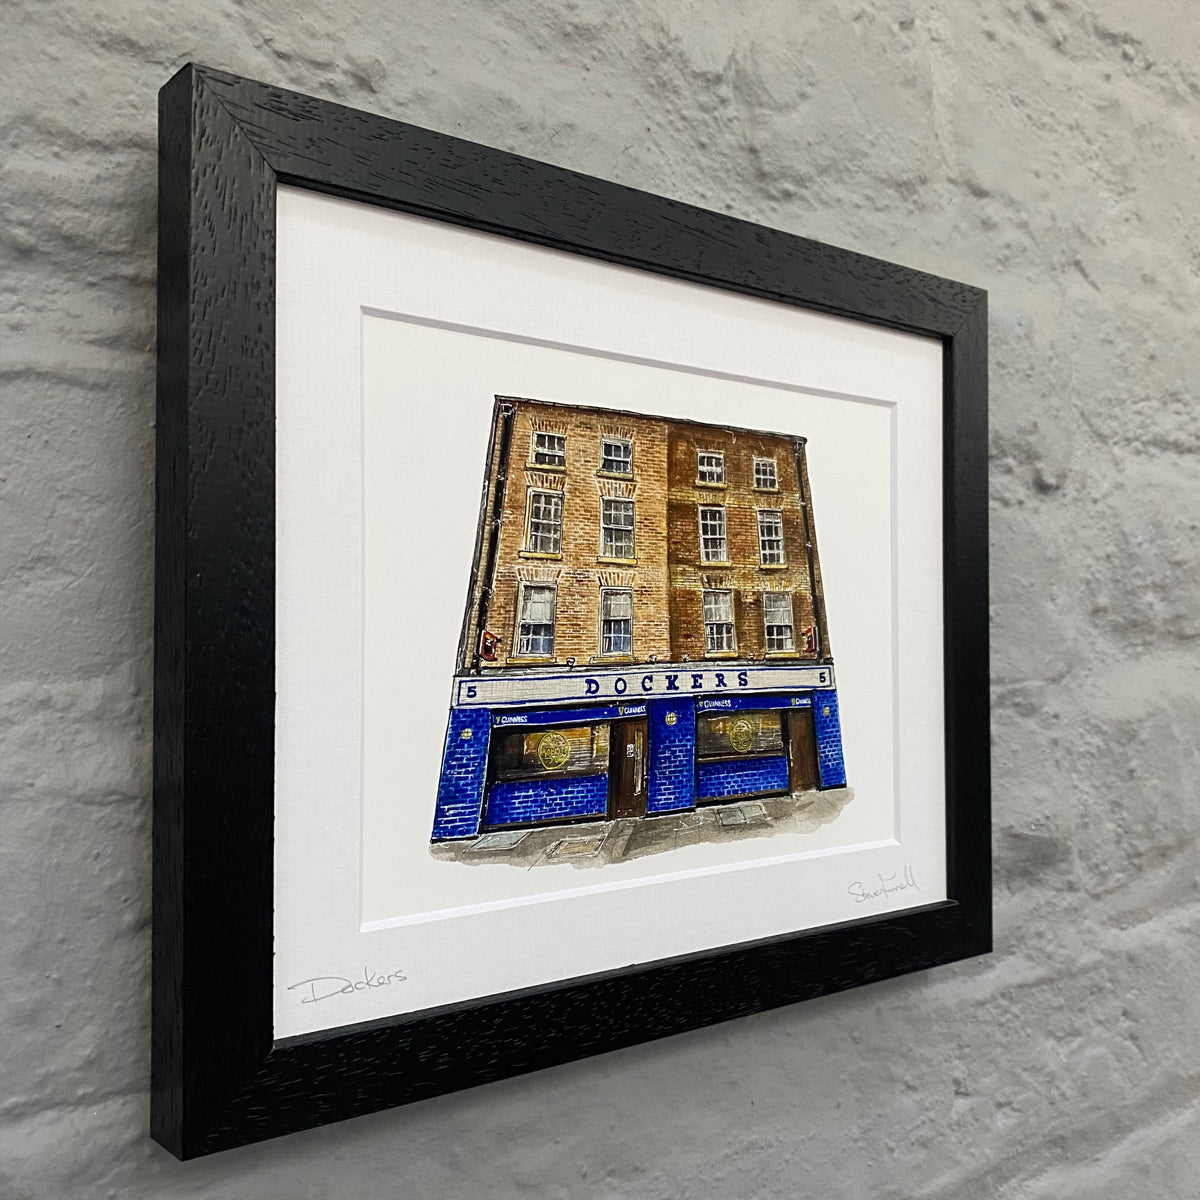 Dockers-Pub-Dublin-docklands-Framed-artwork